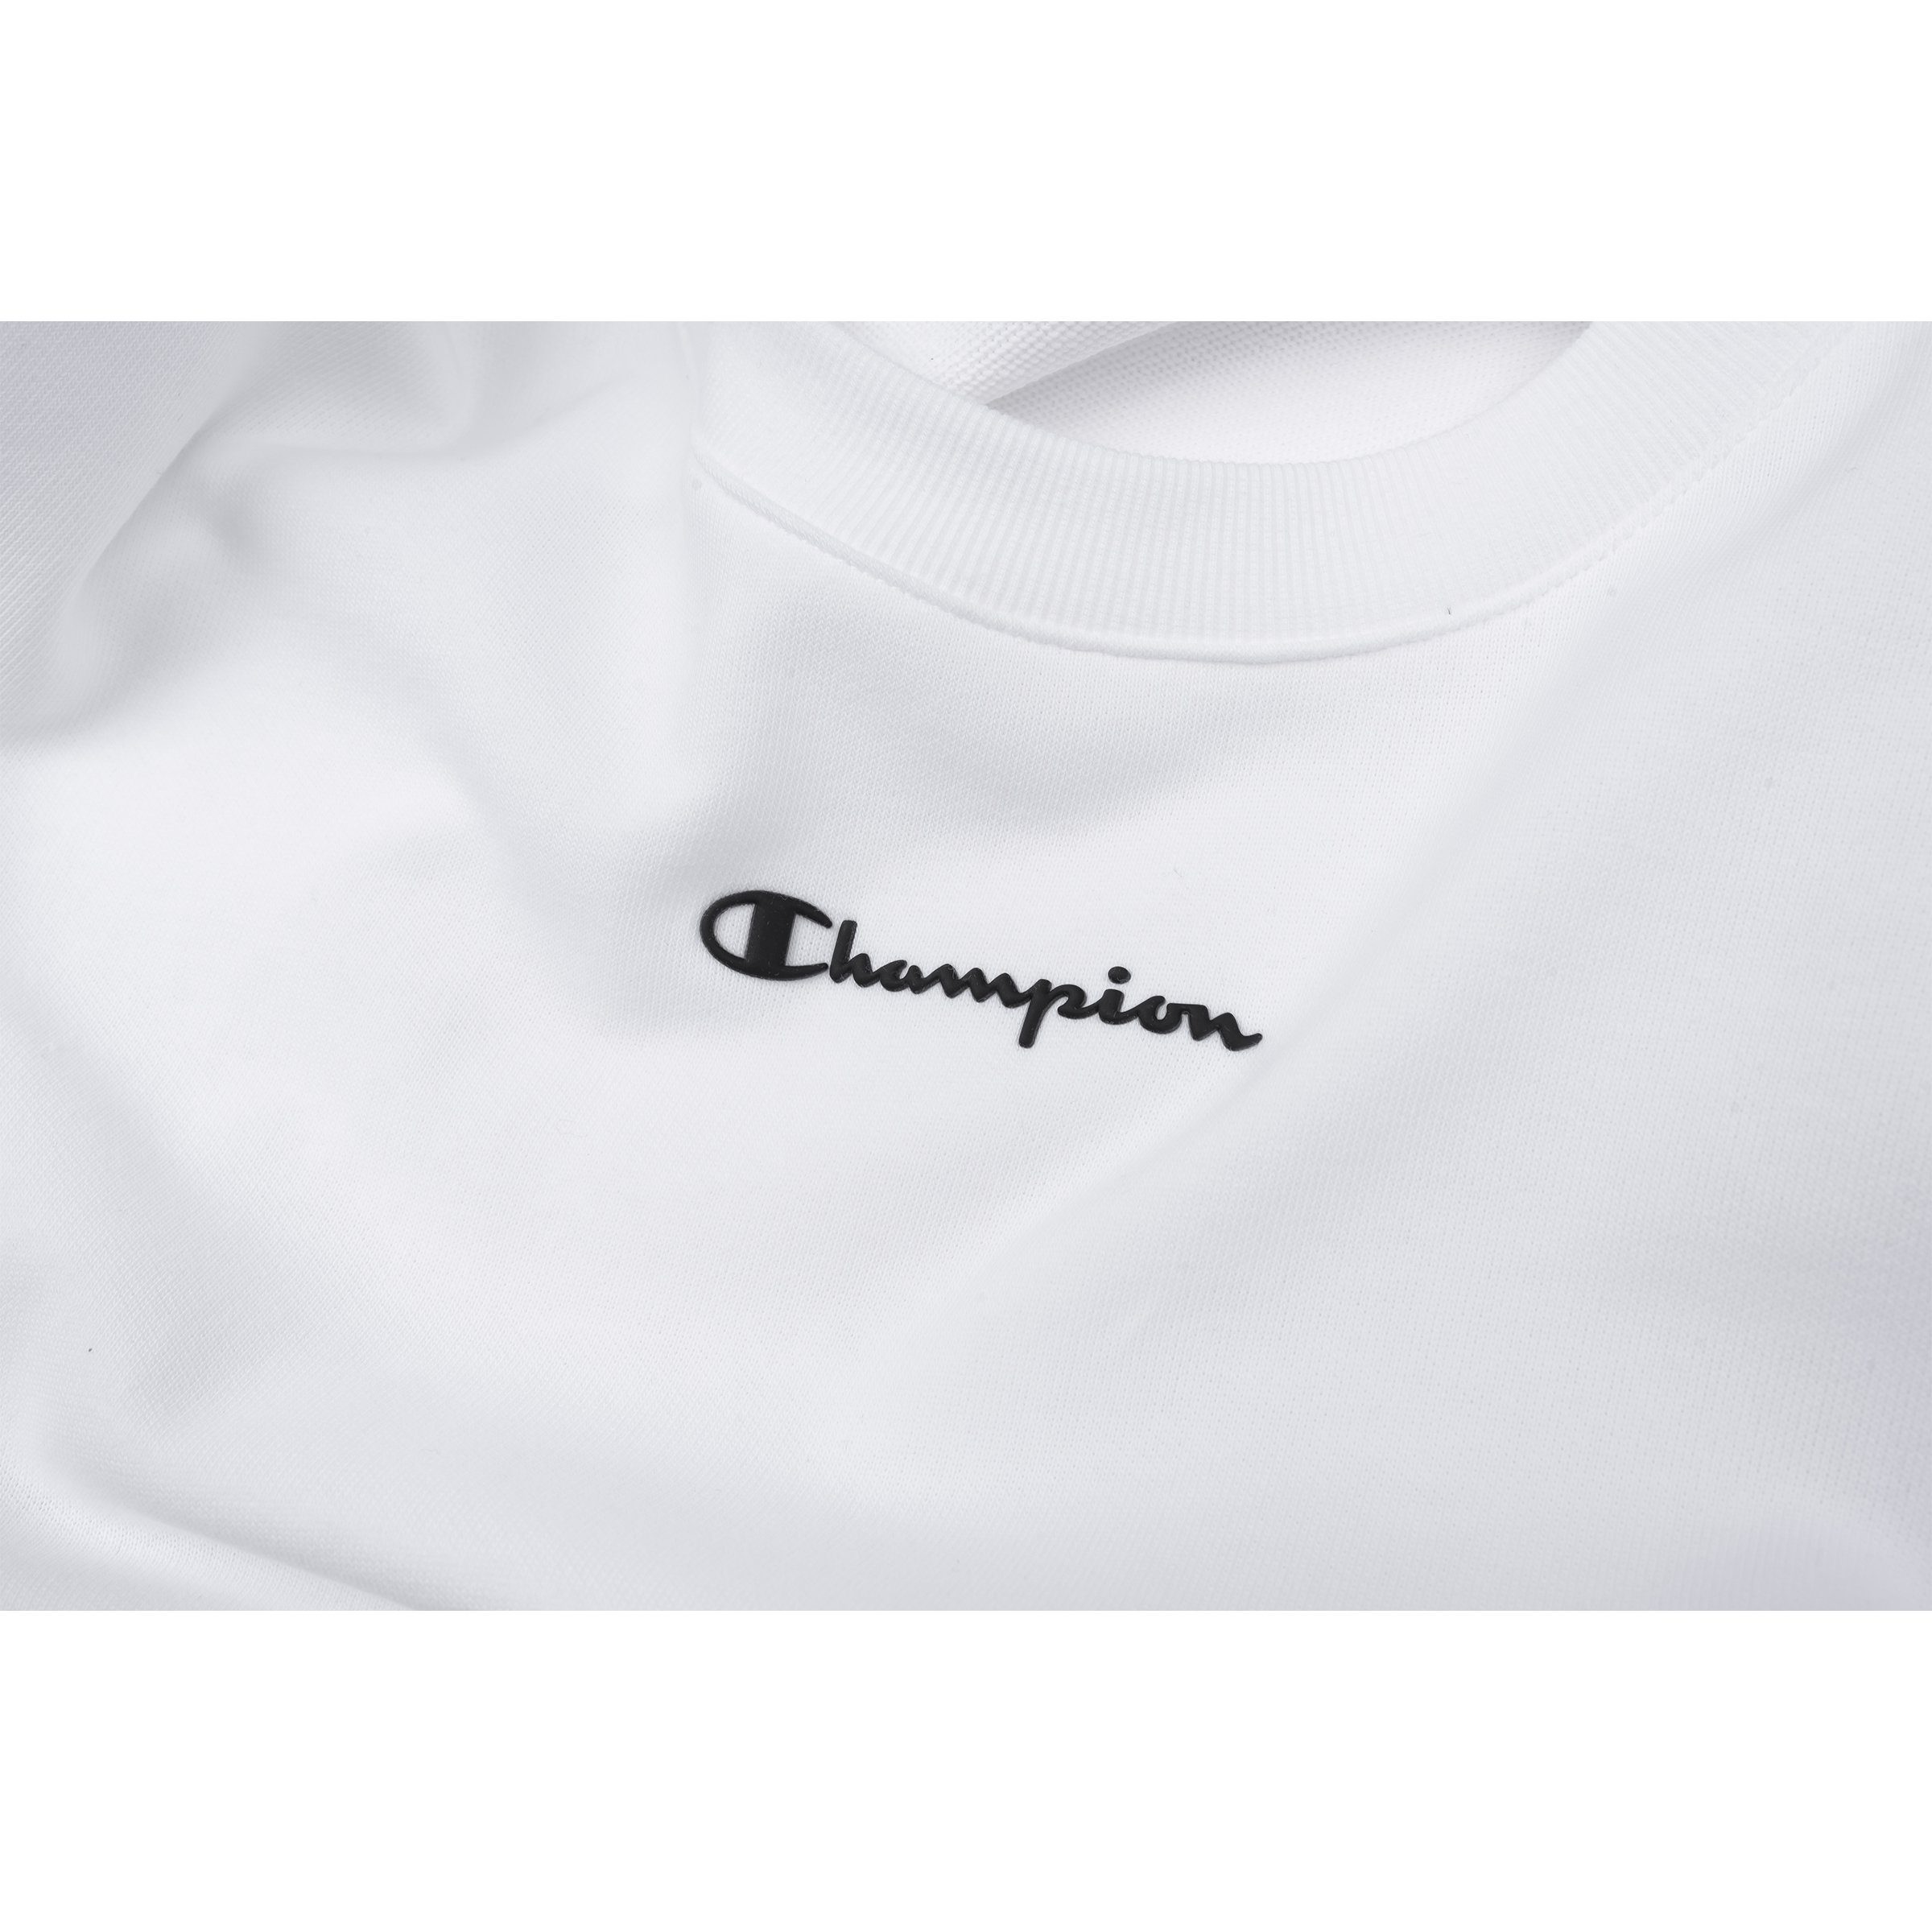 Champion Sweatshirt (oxgm) weiß Sweatshirt (wht)/gelb Crewneck Damen (ncg)/grau 114021 Champion